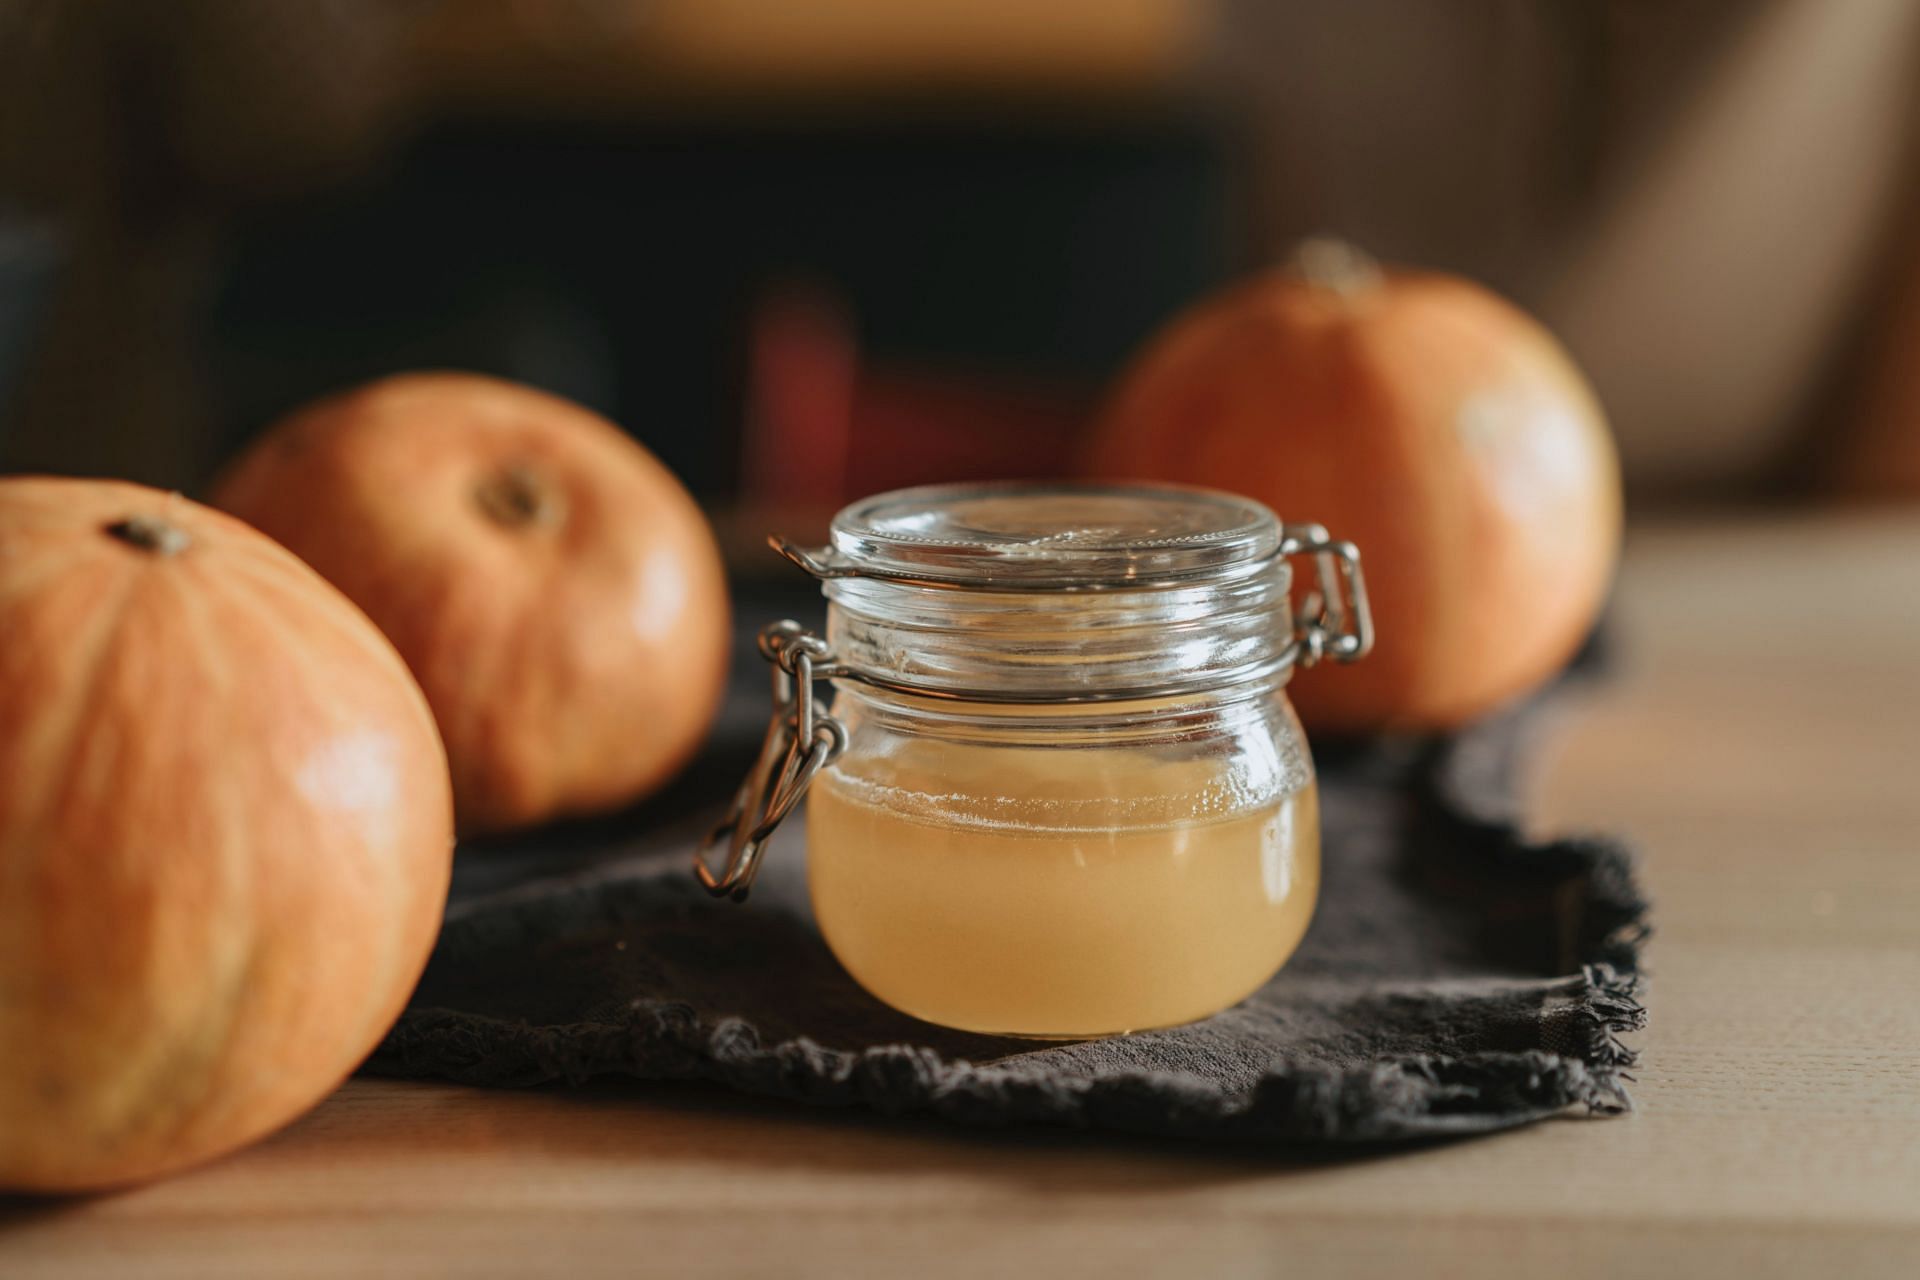 Apple cider vinegar is effective in healing the skin. (Image via Pexels/Olia Danilevich)